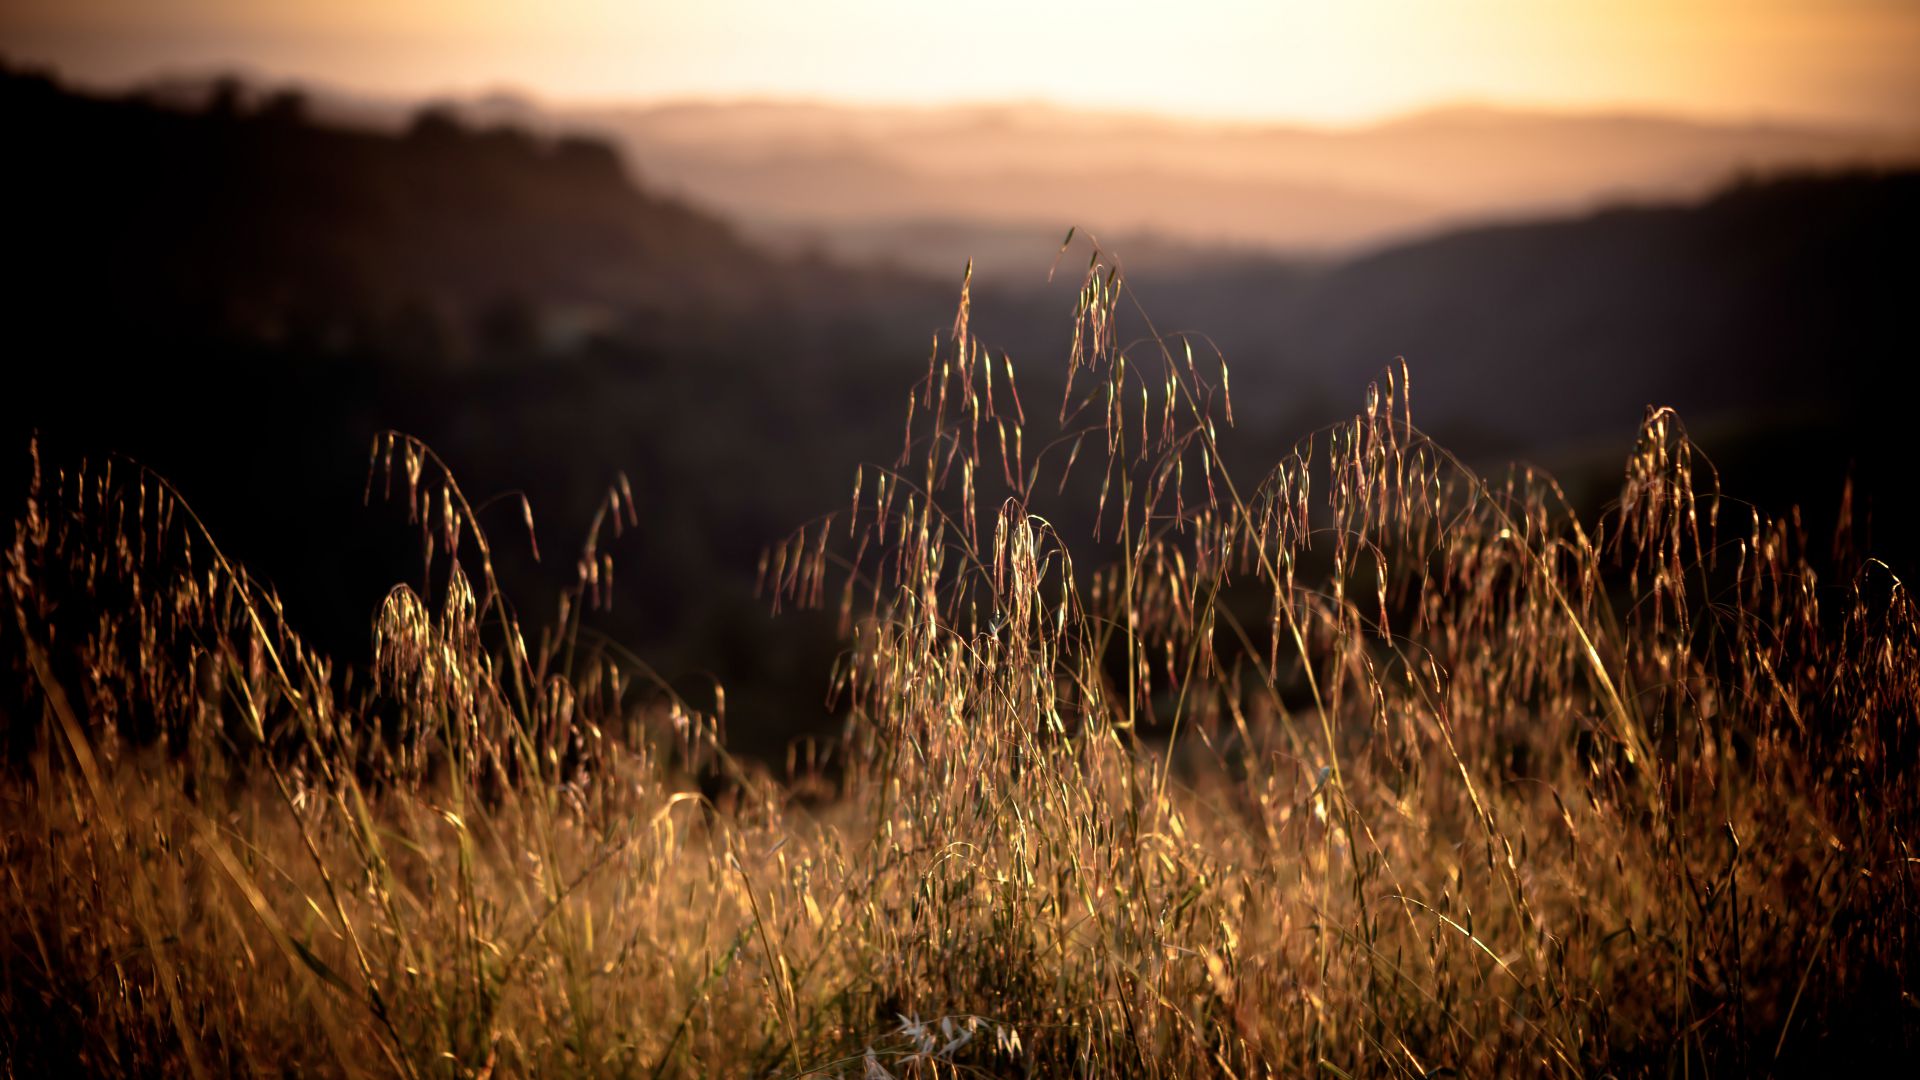 Калифорния, 4k, HD, 8k, Поле, трава, закат, California, 4k, HD wallpaper, 8k, Field, sunset, grass (horizontal)